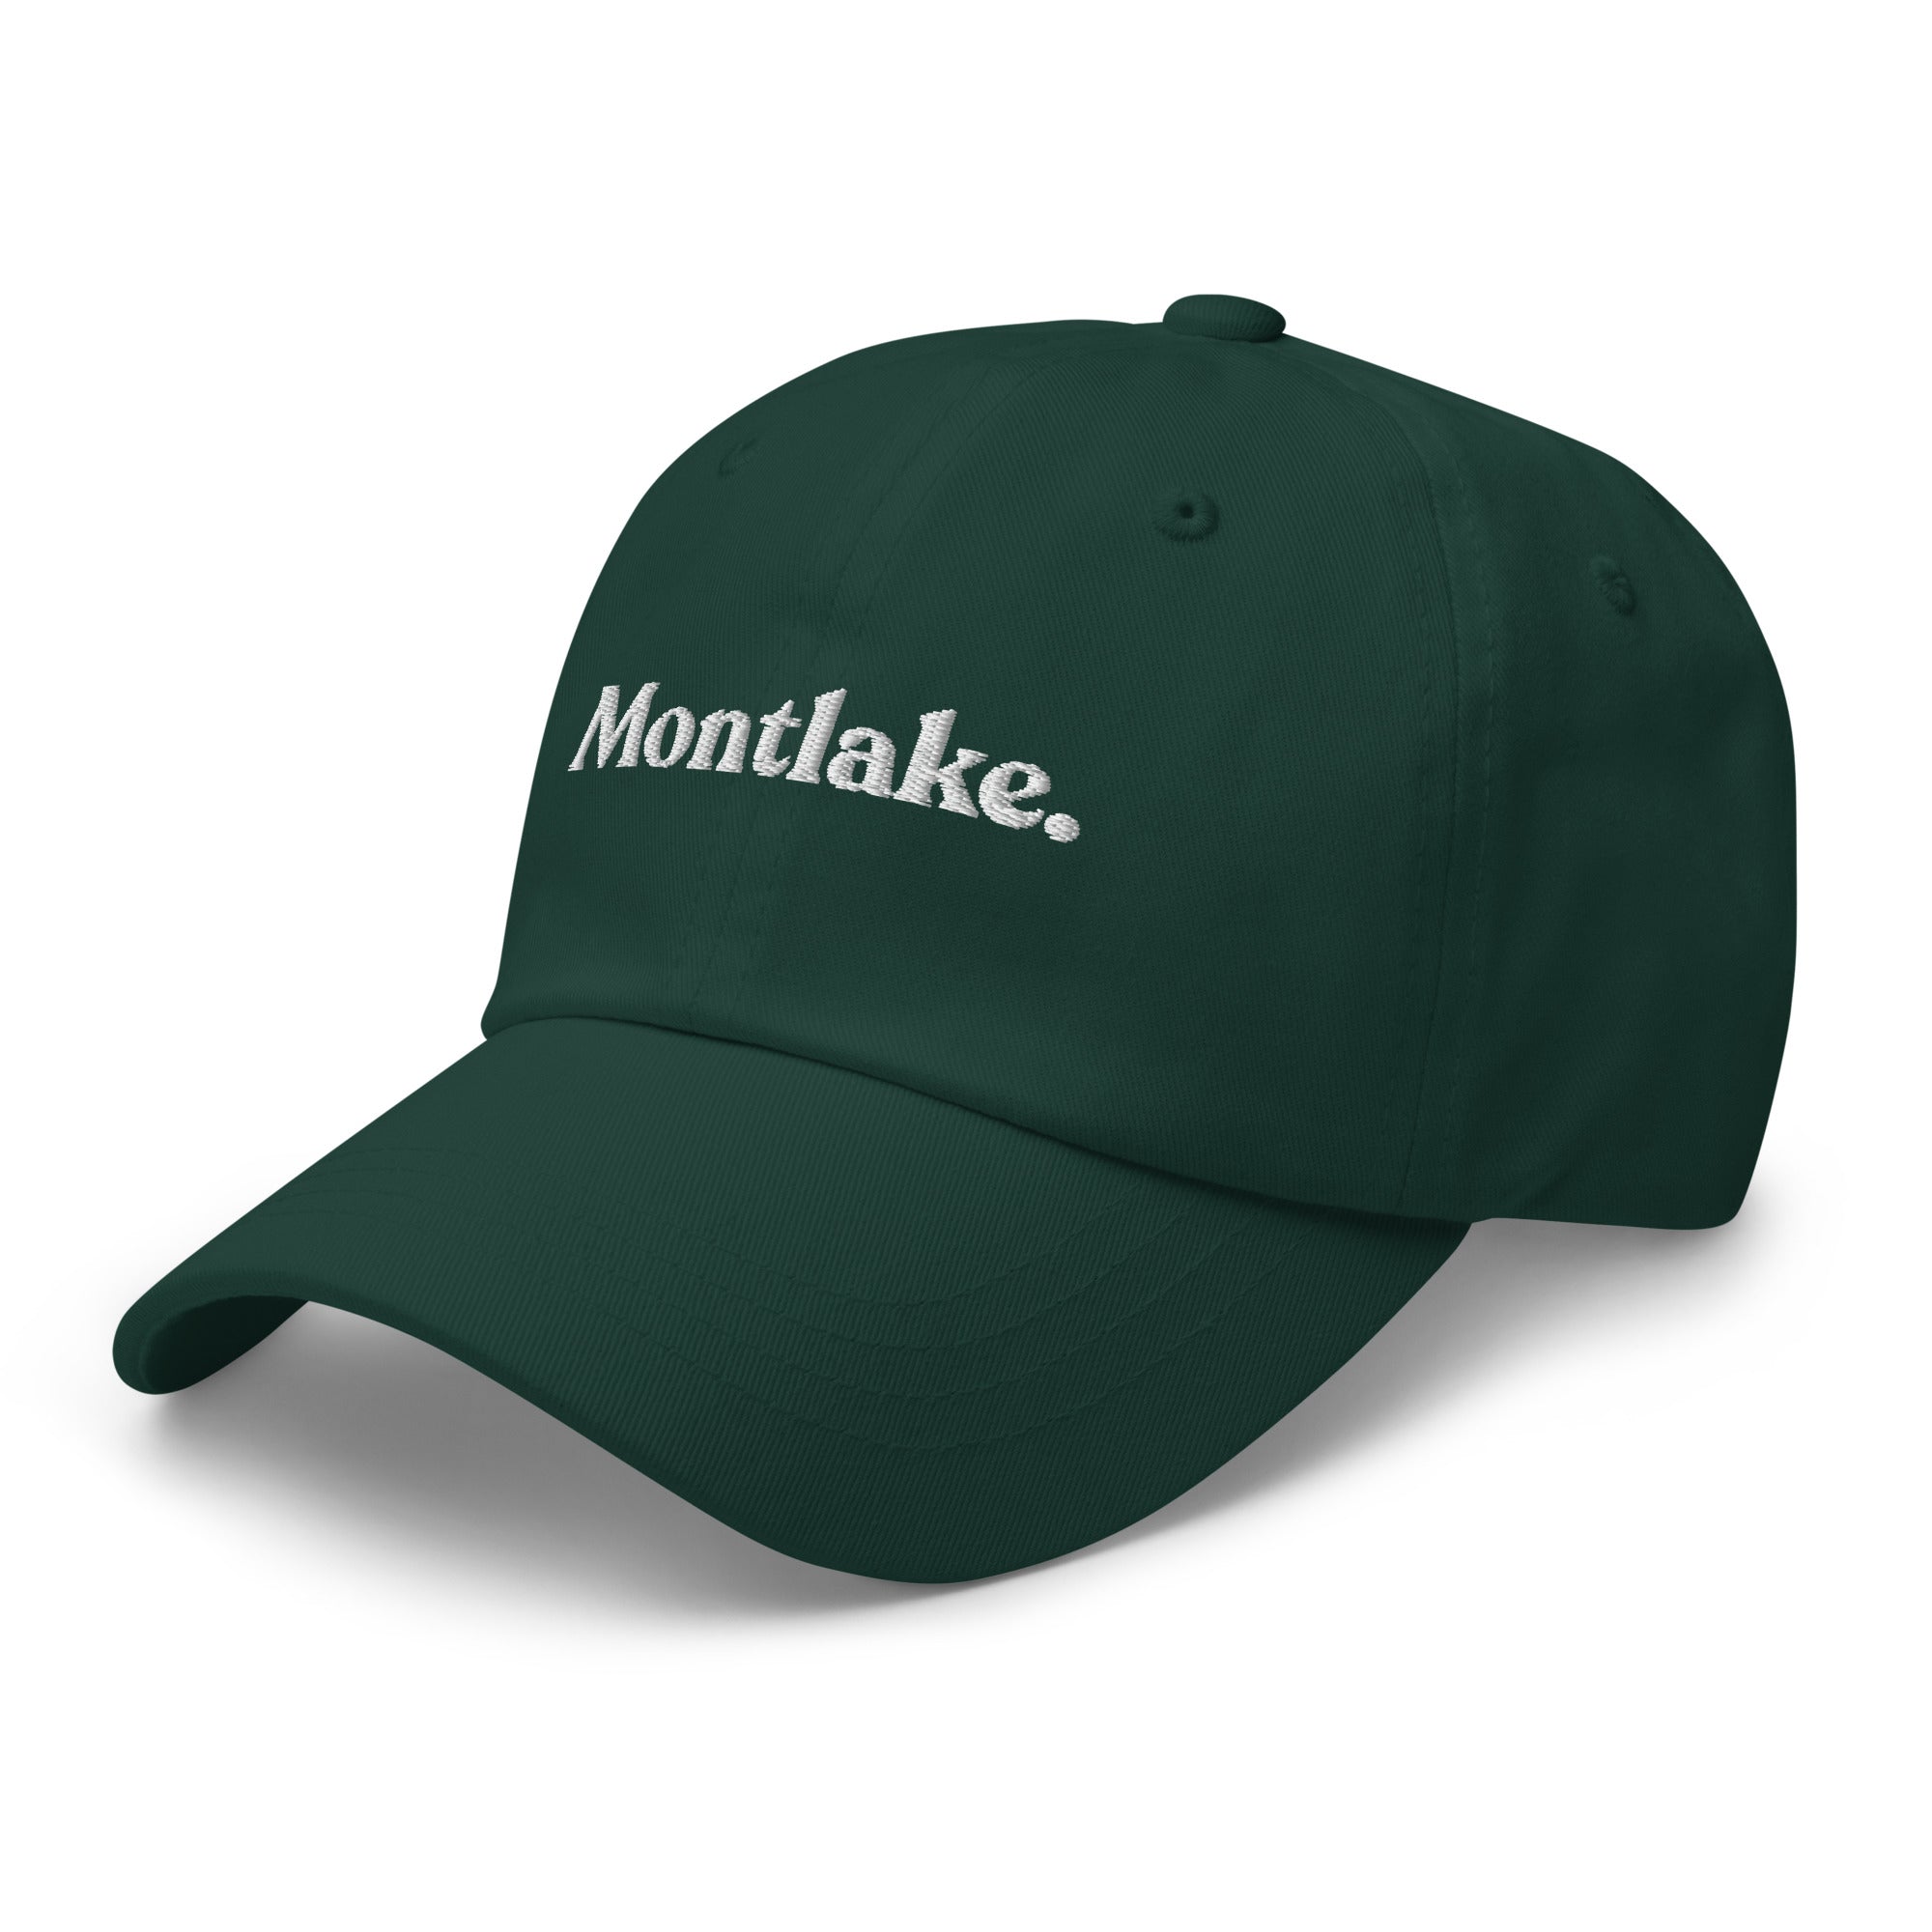 Classic Dad Hat - Montlake | Seattle, WA